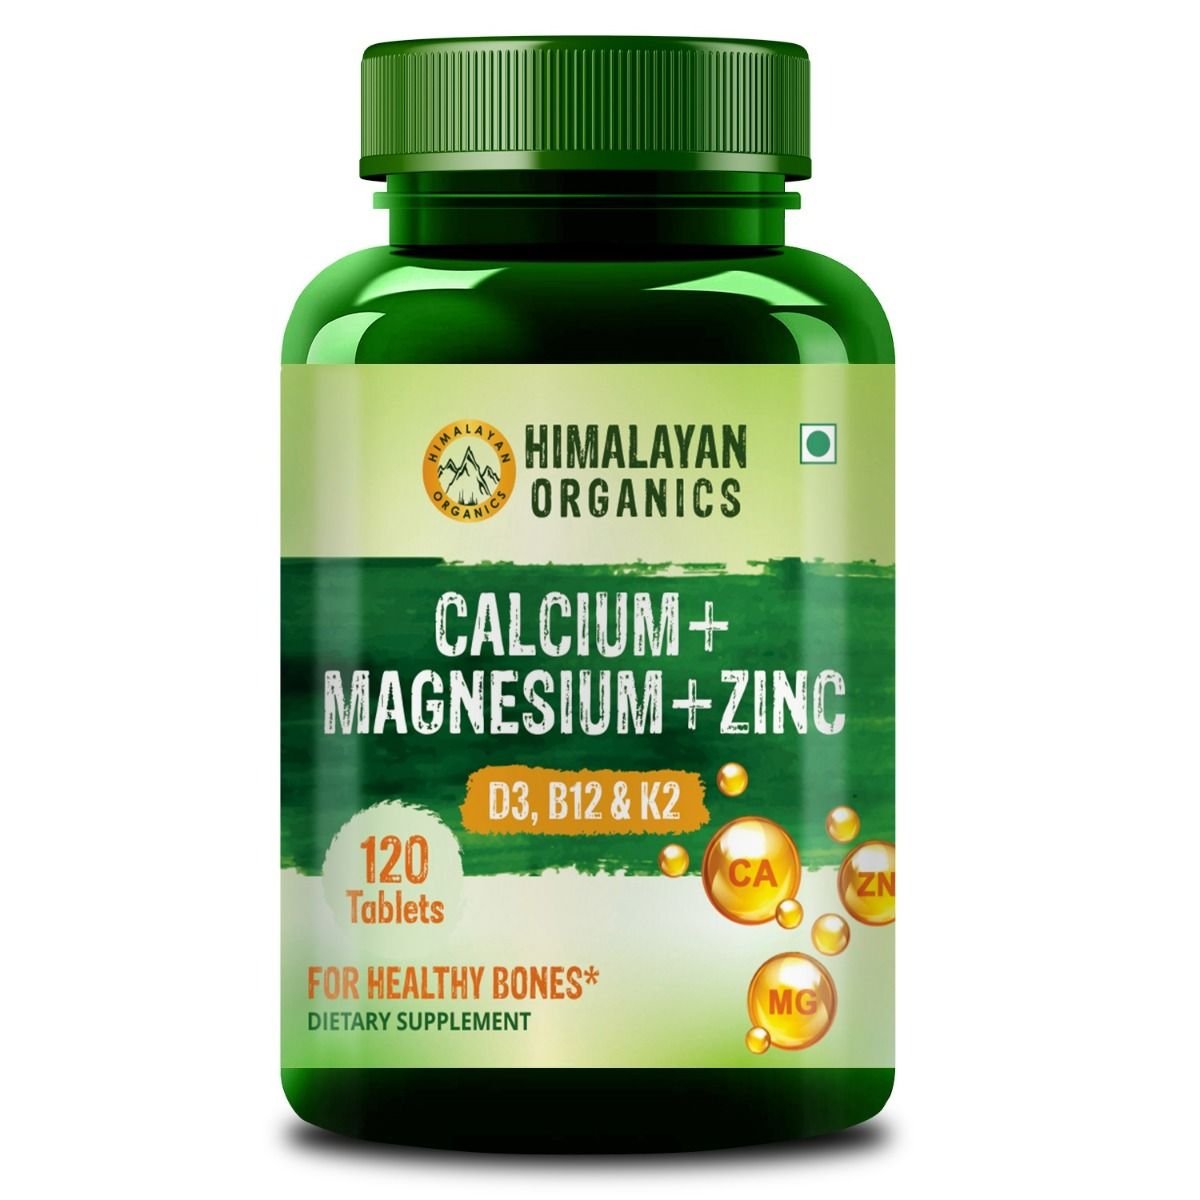 Buy Himalayan Organics Calcium+Magnesium+Zinc, 120 Tablets Online